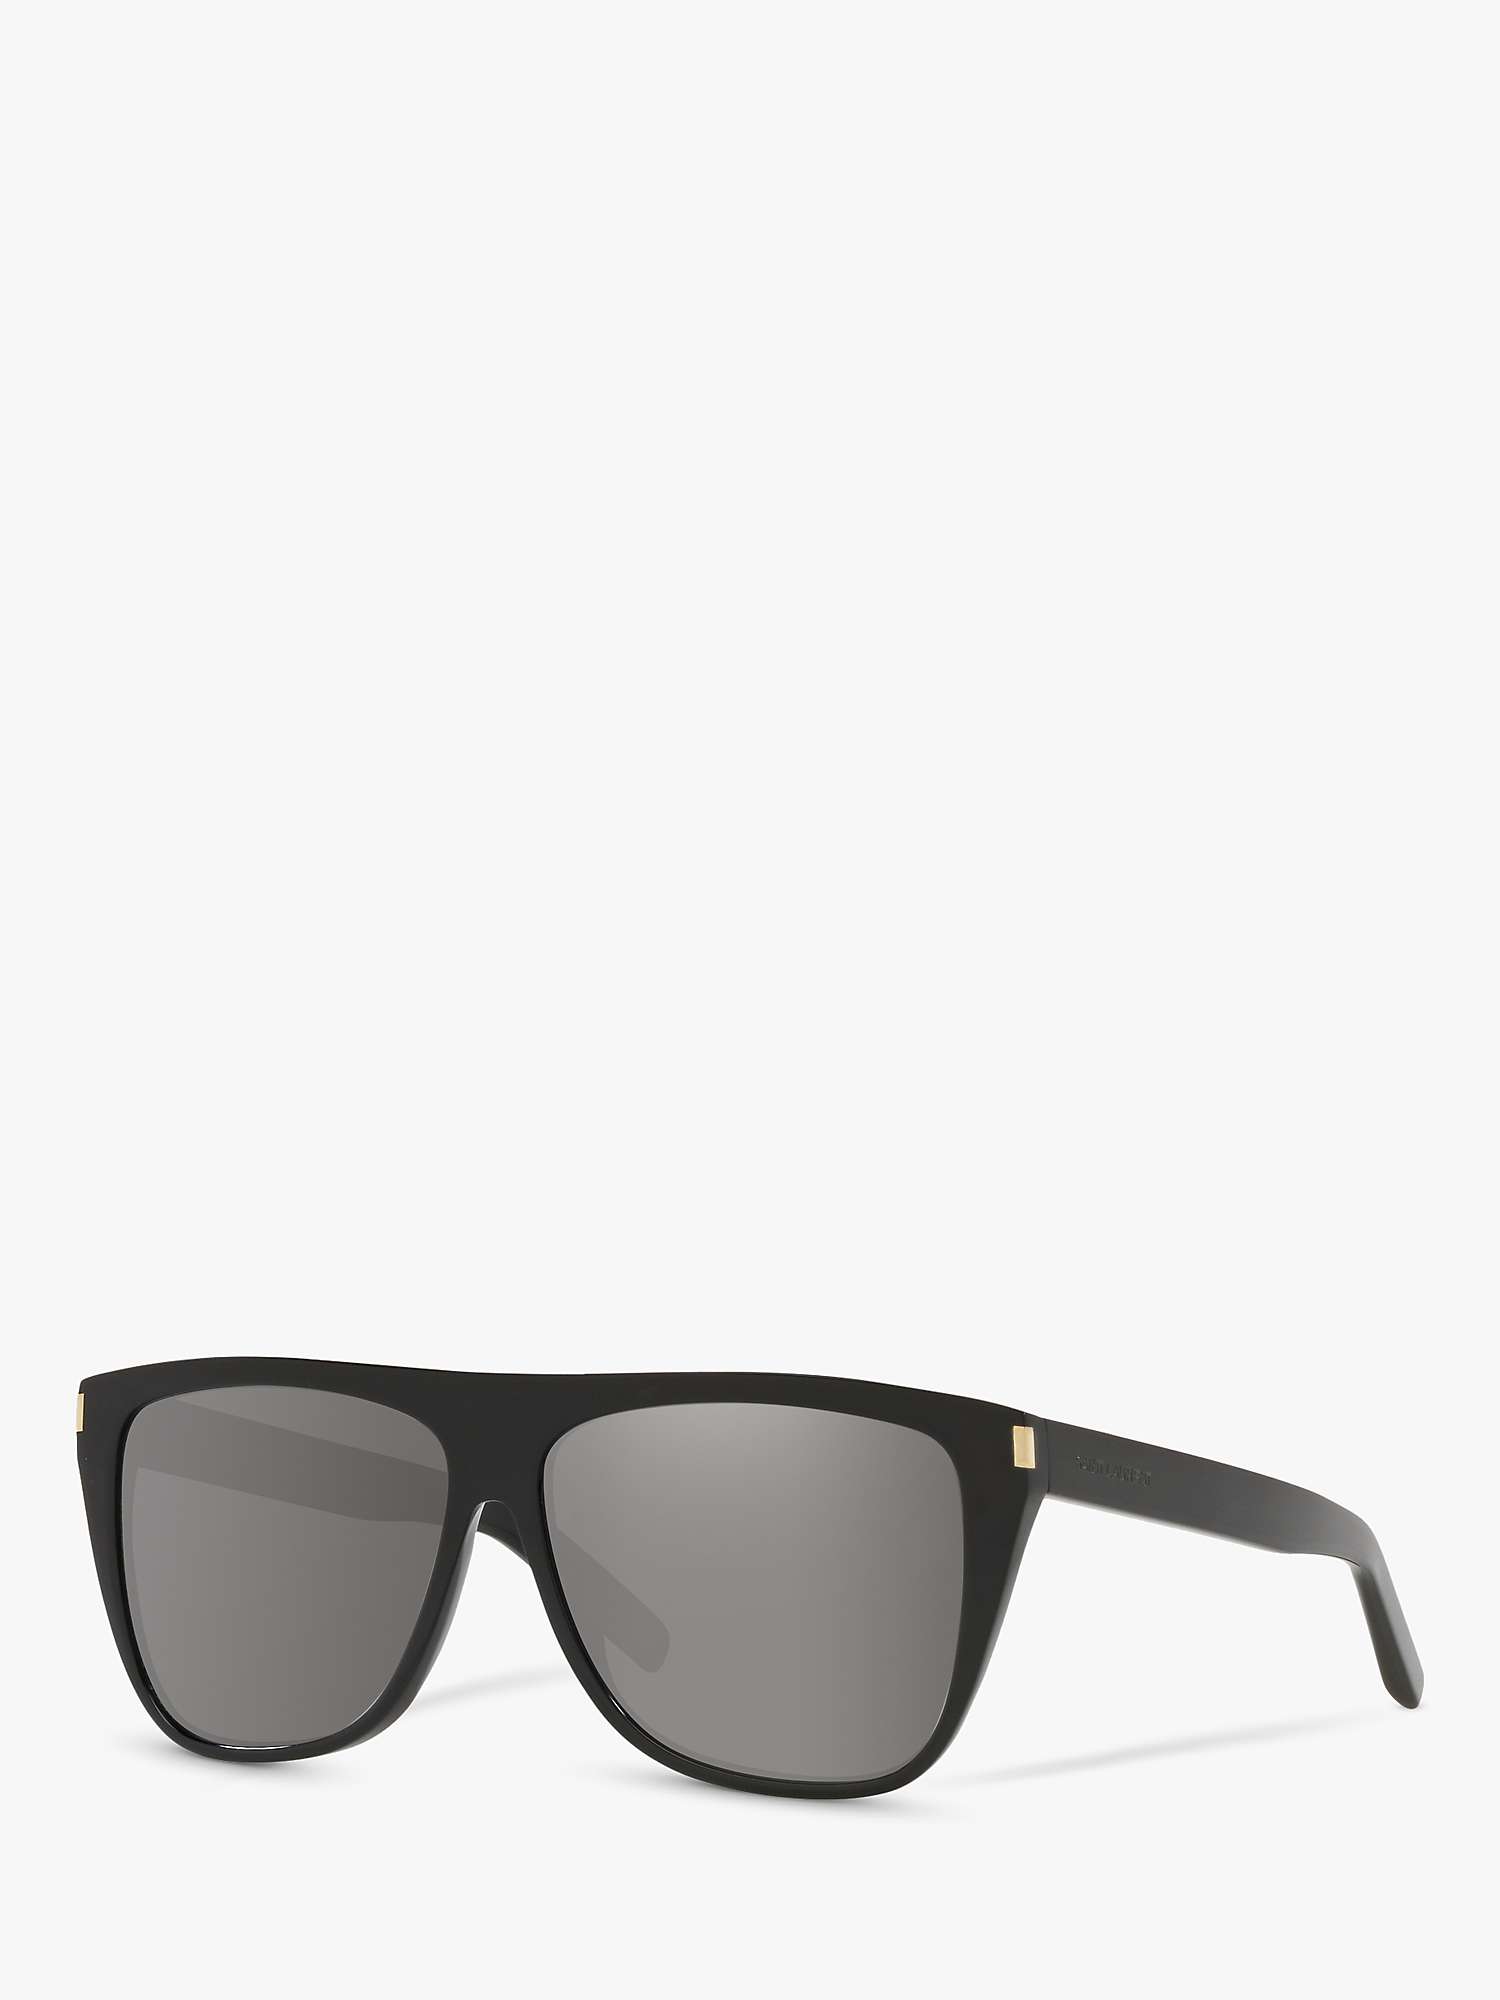 Buy Yves Saint Laurent SL1 Unisex Rectangular Sunglasses, Black/Mirror Grey Online at johnlewis.com